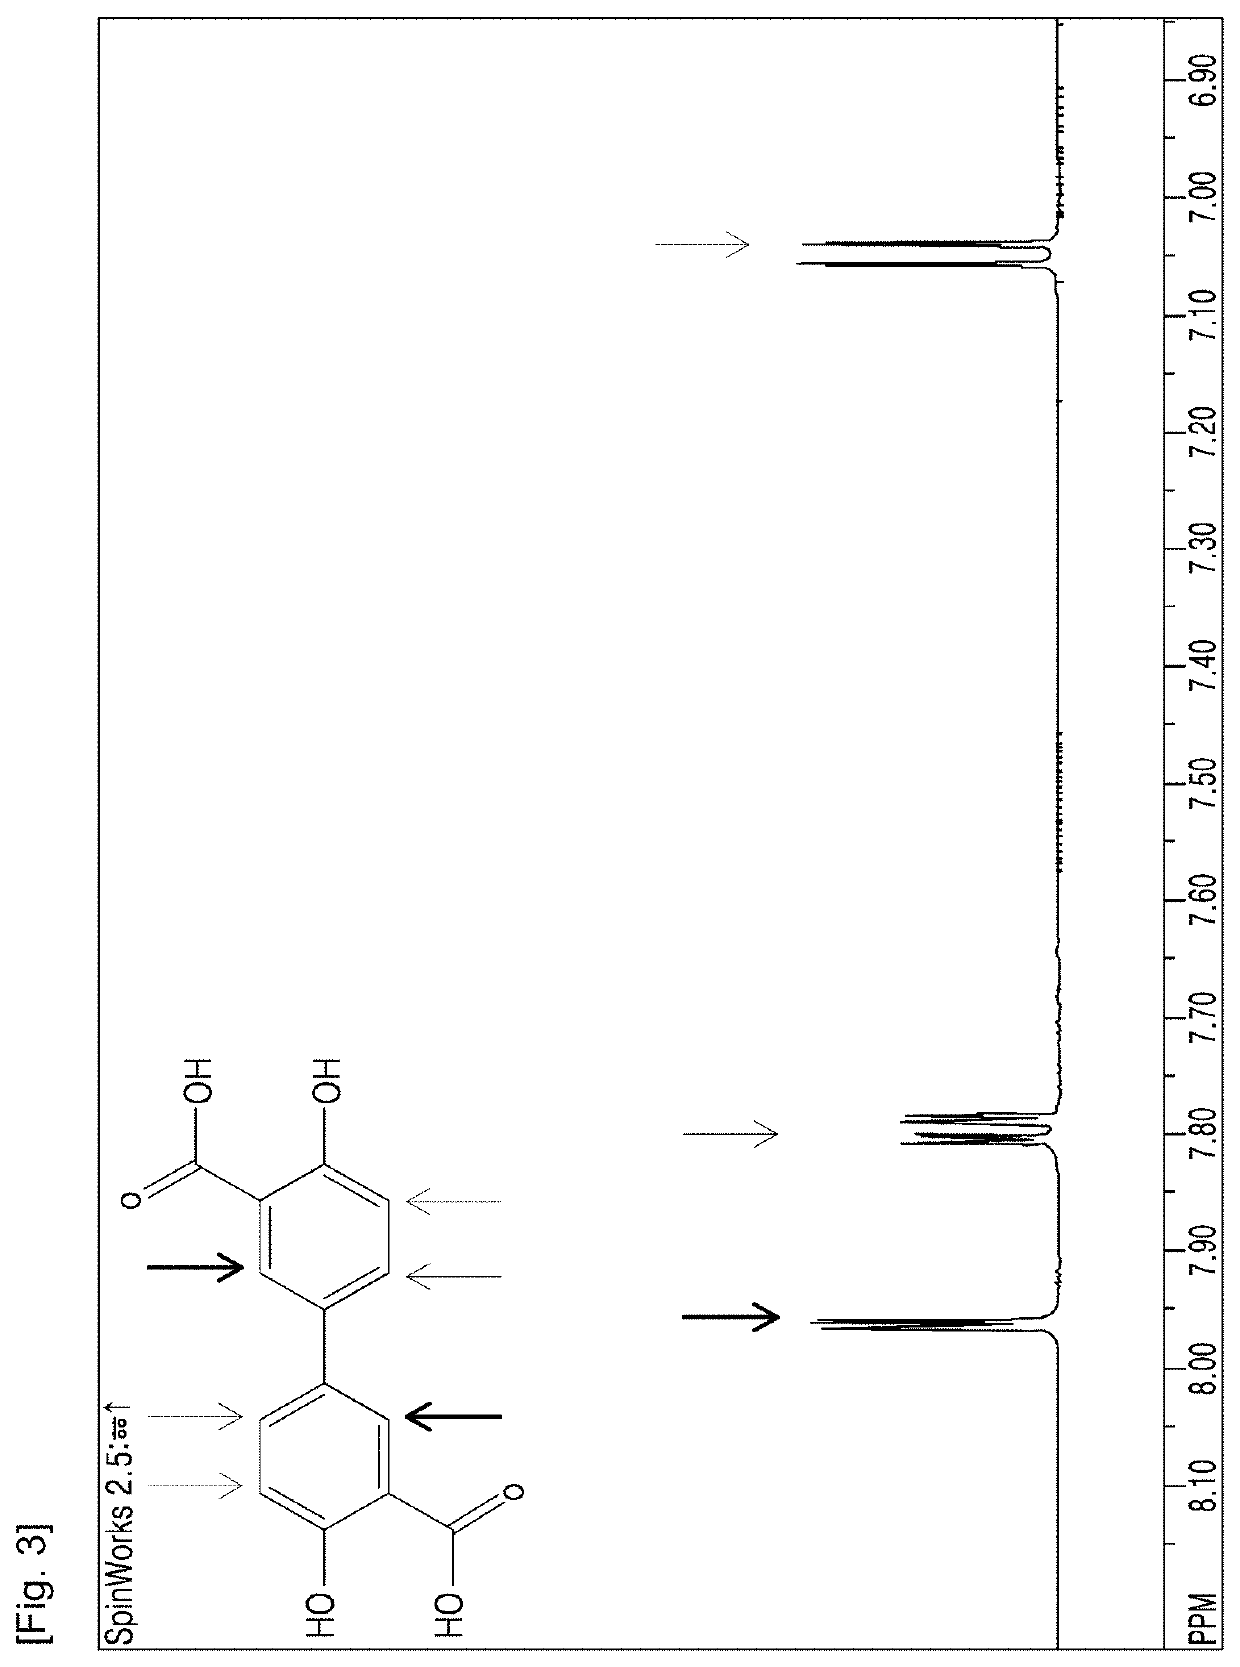 Method for preparing 4,4′-dihydroxy-[1,1′-biphenyl-3,3′-dicarboxylic acid]